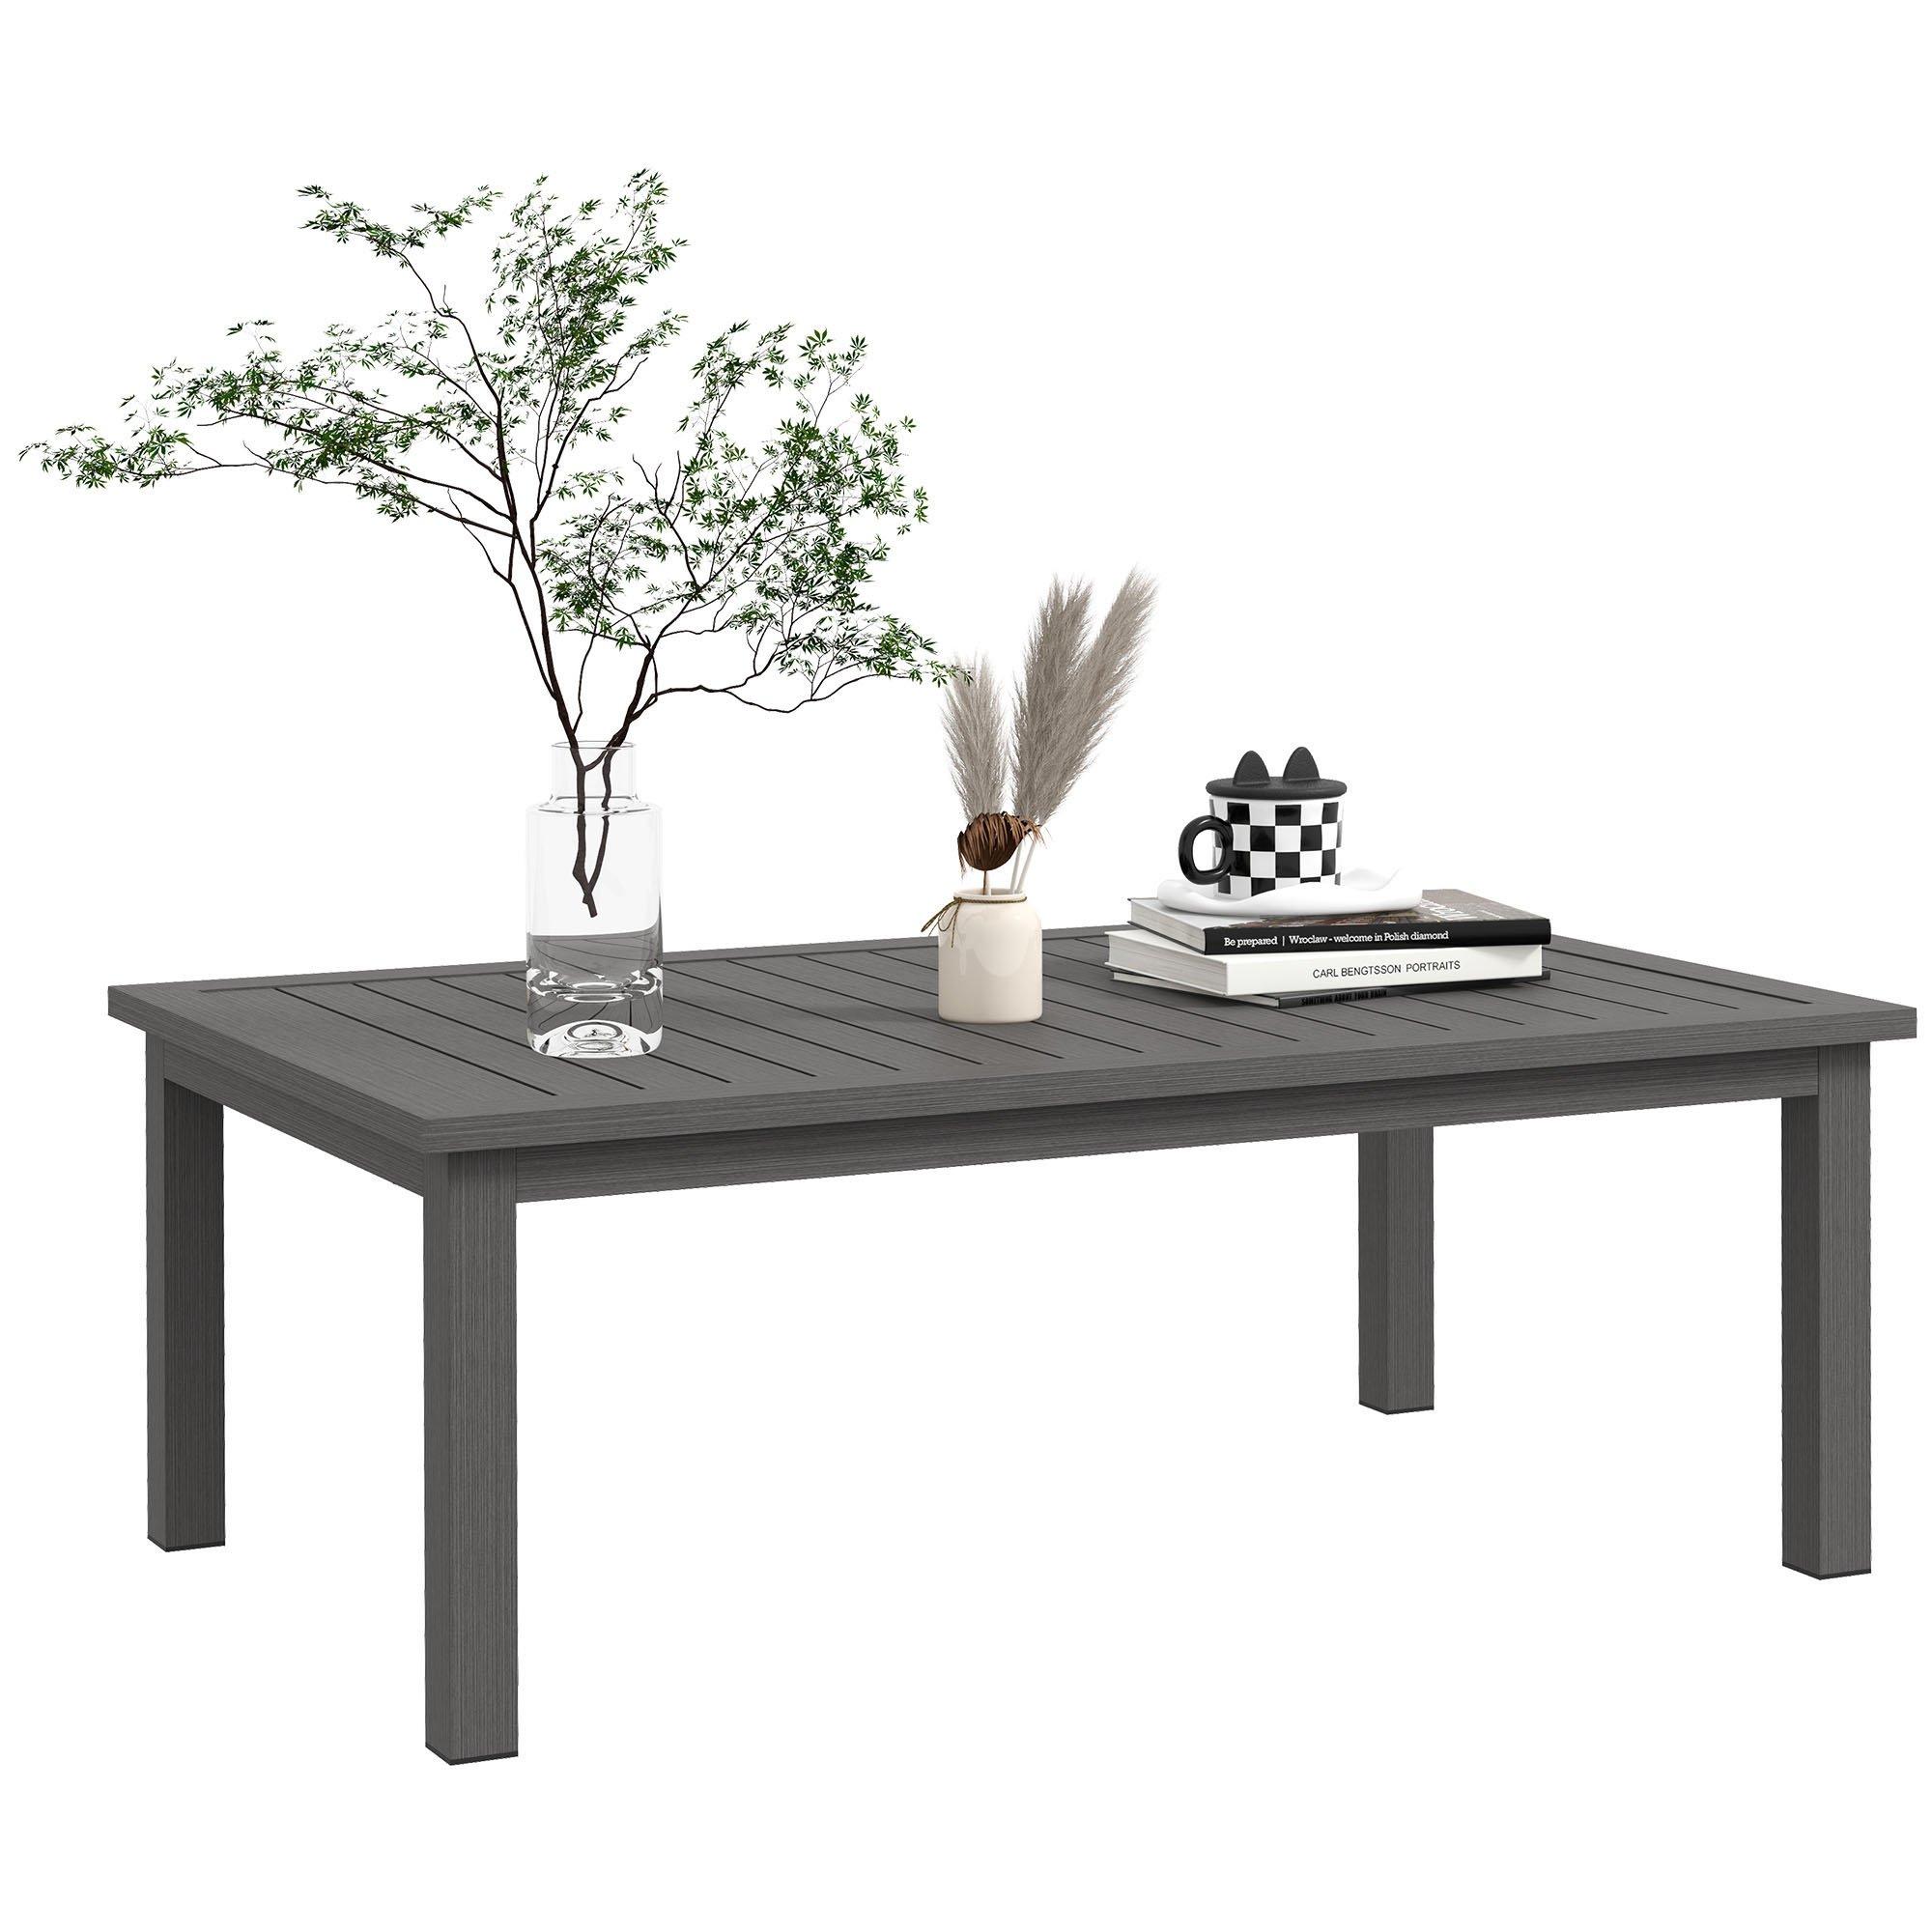 Aluminium Outdoor Coffee Table Patio Tablewith Wood Grain Effect